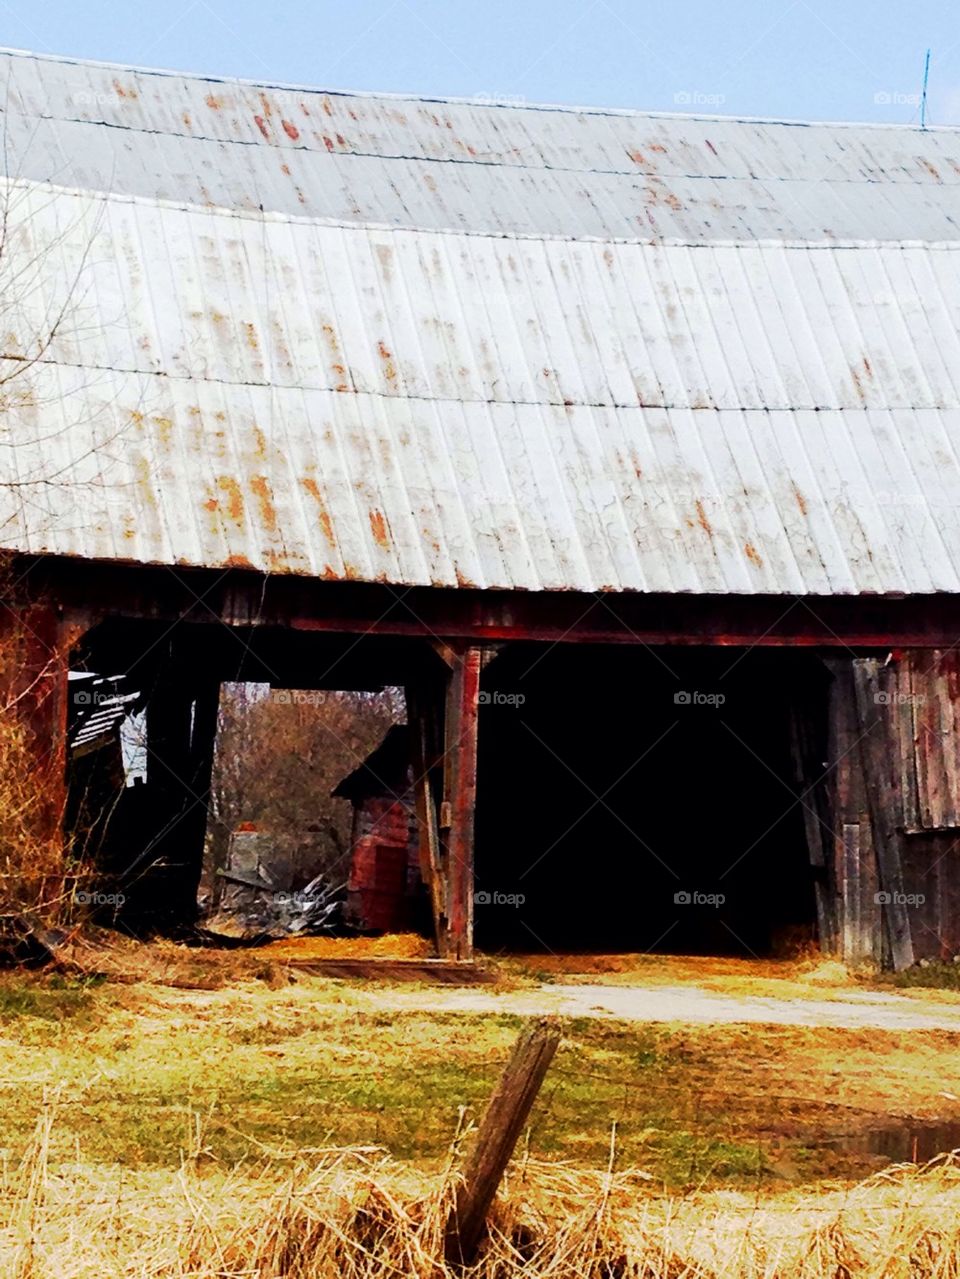 Through The barn 